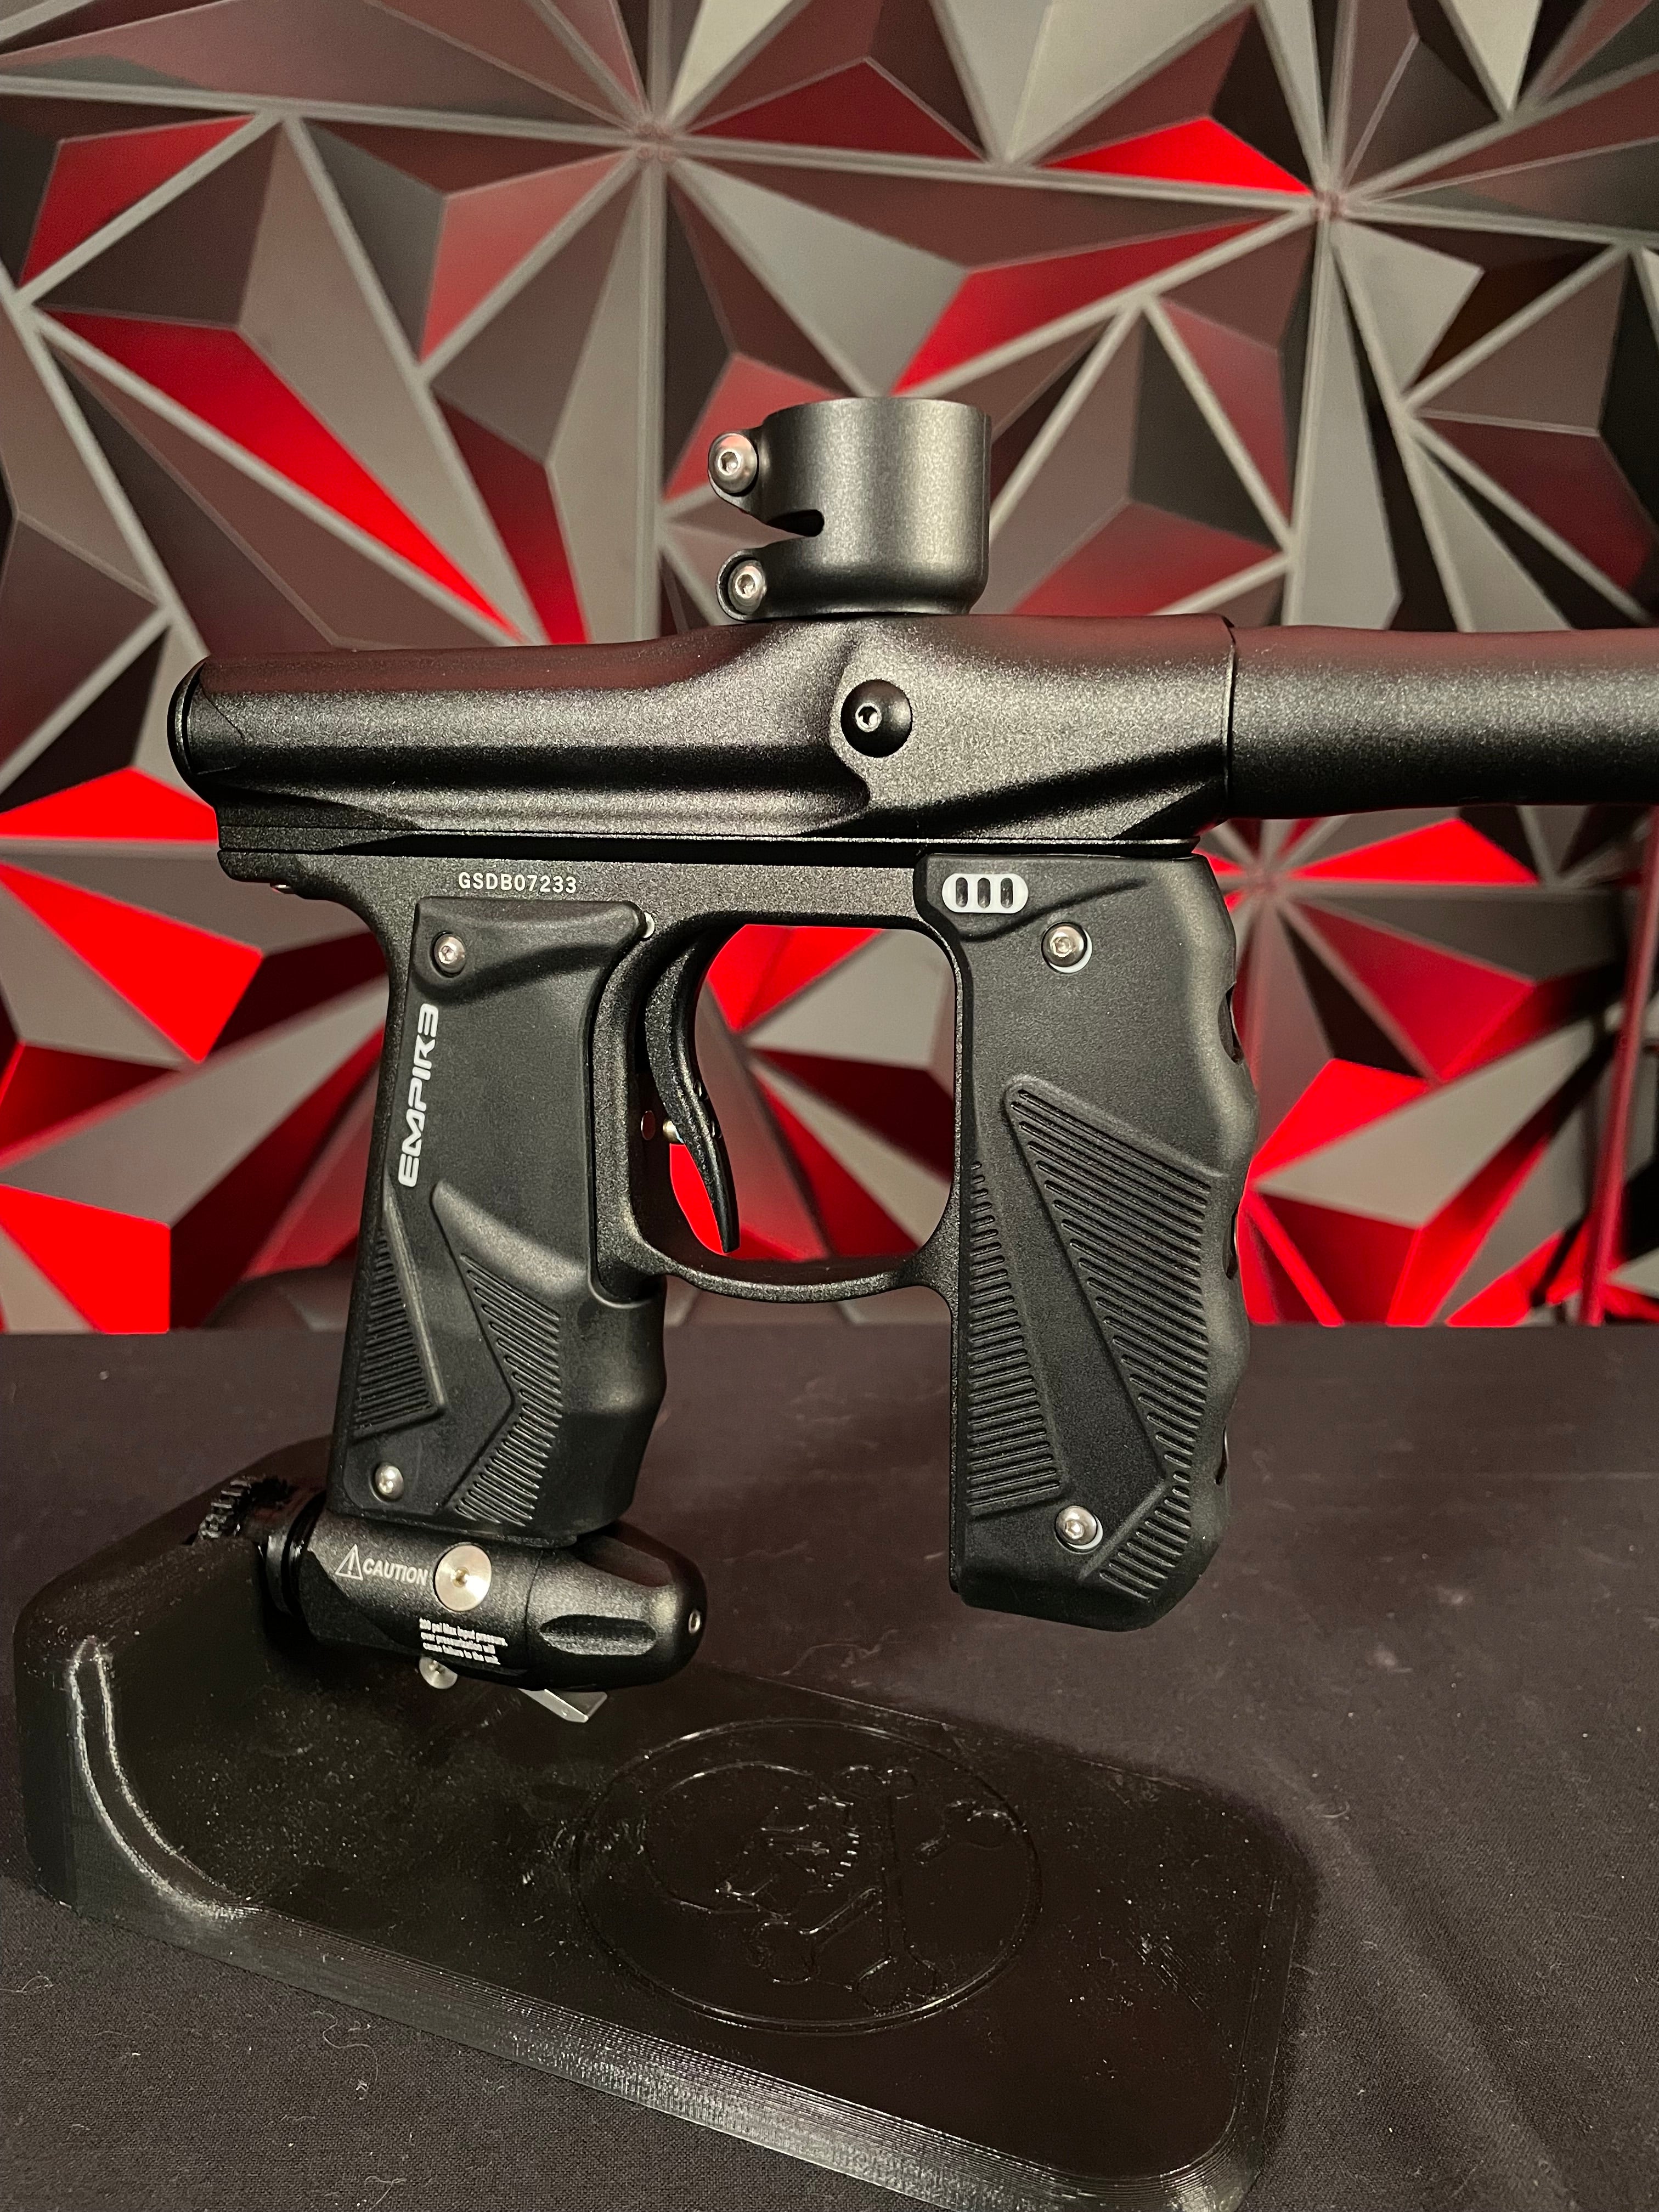 Used Empire Mini GS Paintball Gun - Dust Black w/ 2 Piece Barrel